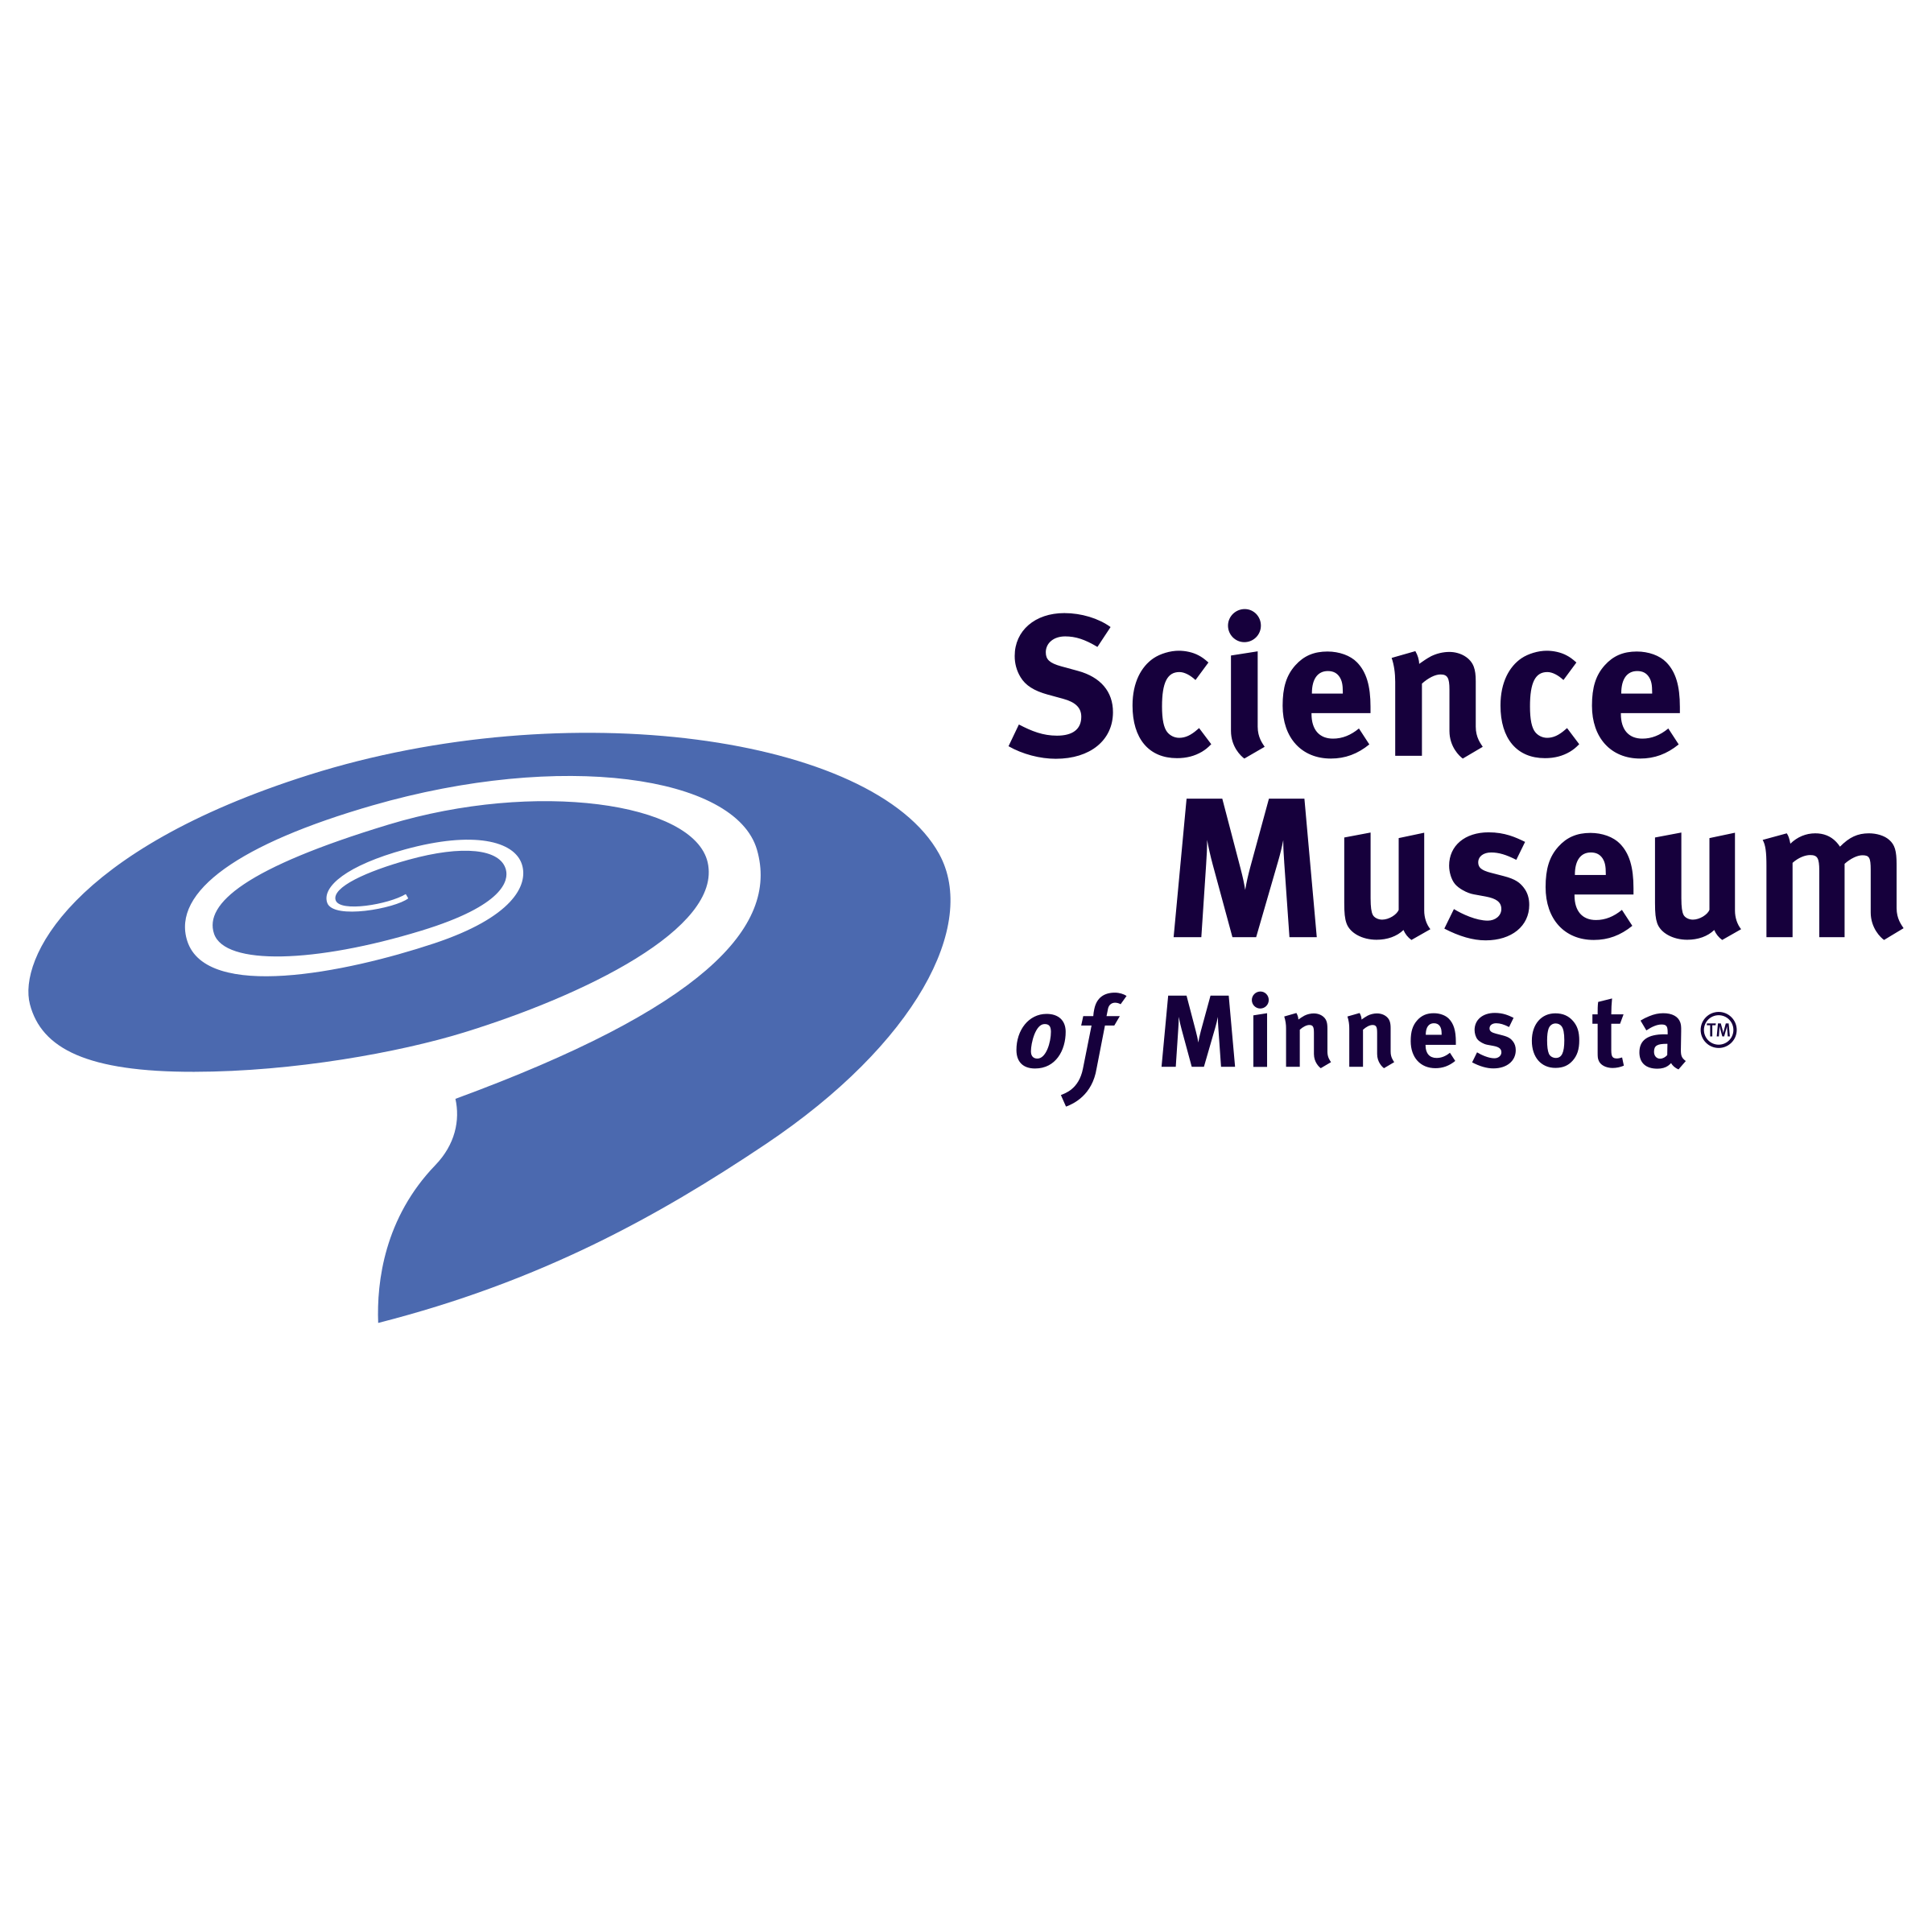 Science Museum Logo - Science Museum of Minnesota Logo PNG Transparent & SVG Vector ...